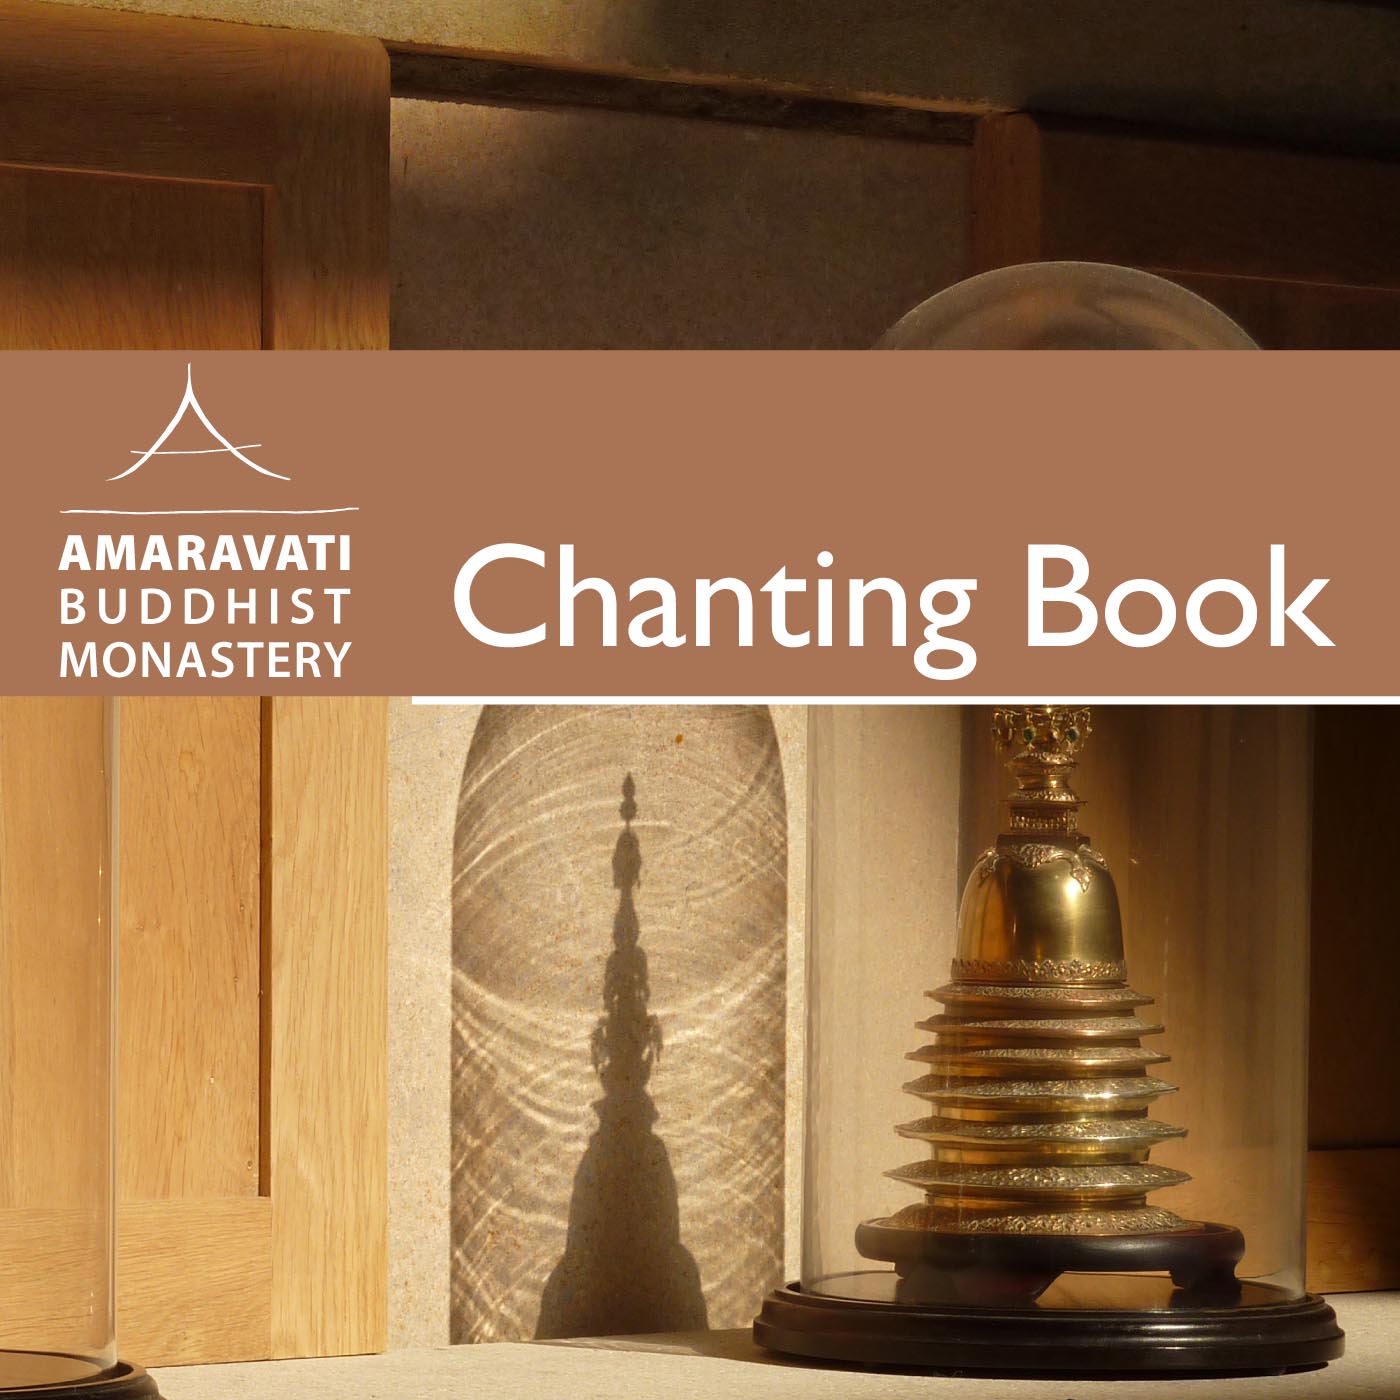 Chanting – from the Amaravati Chanting Book